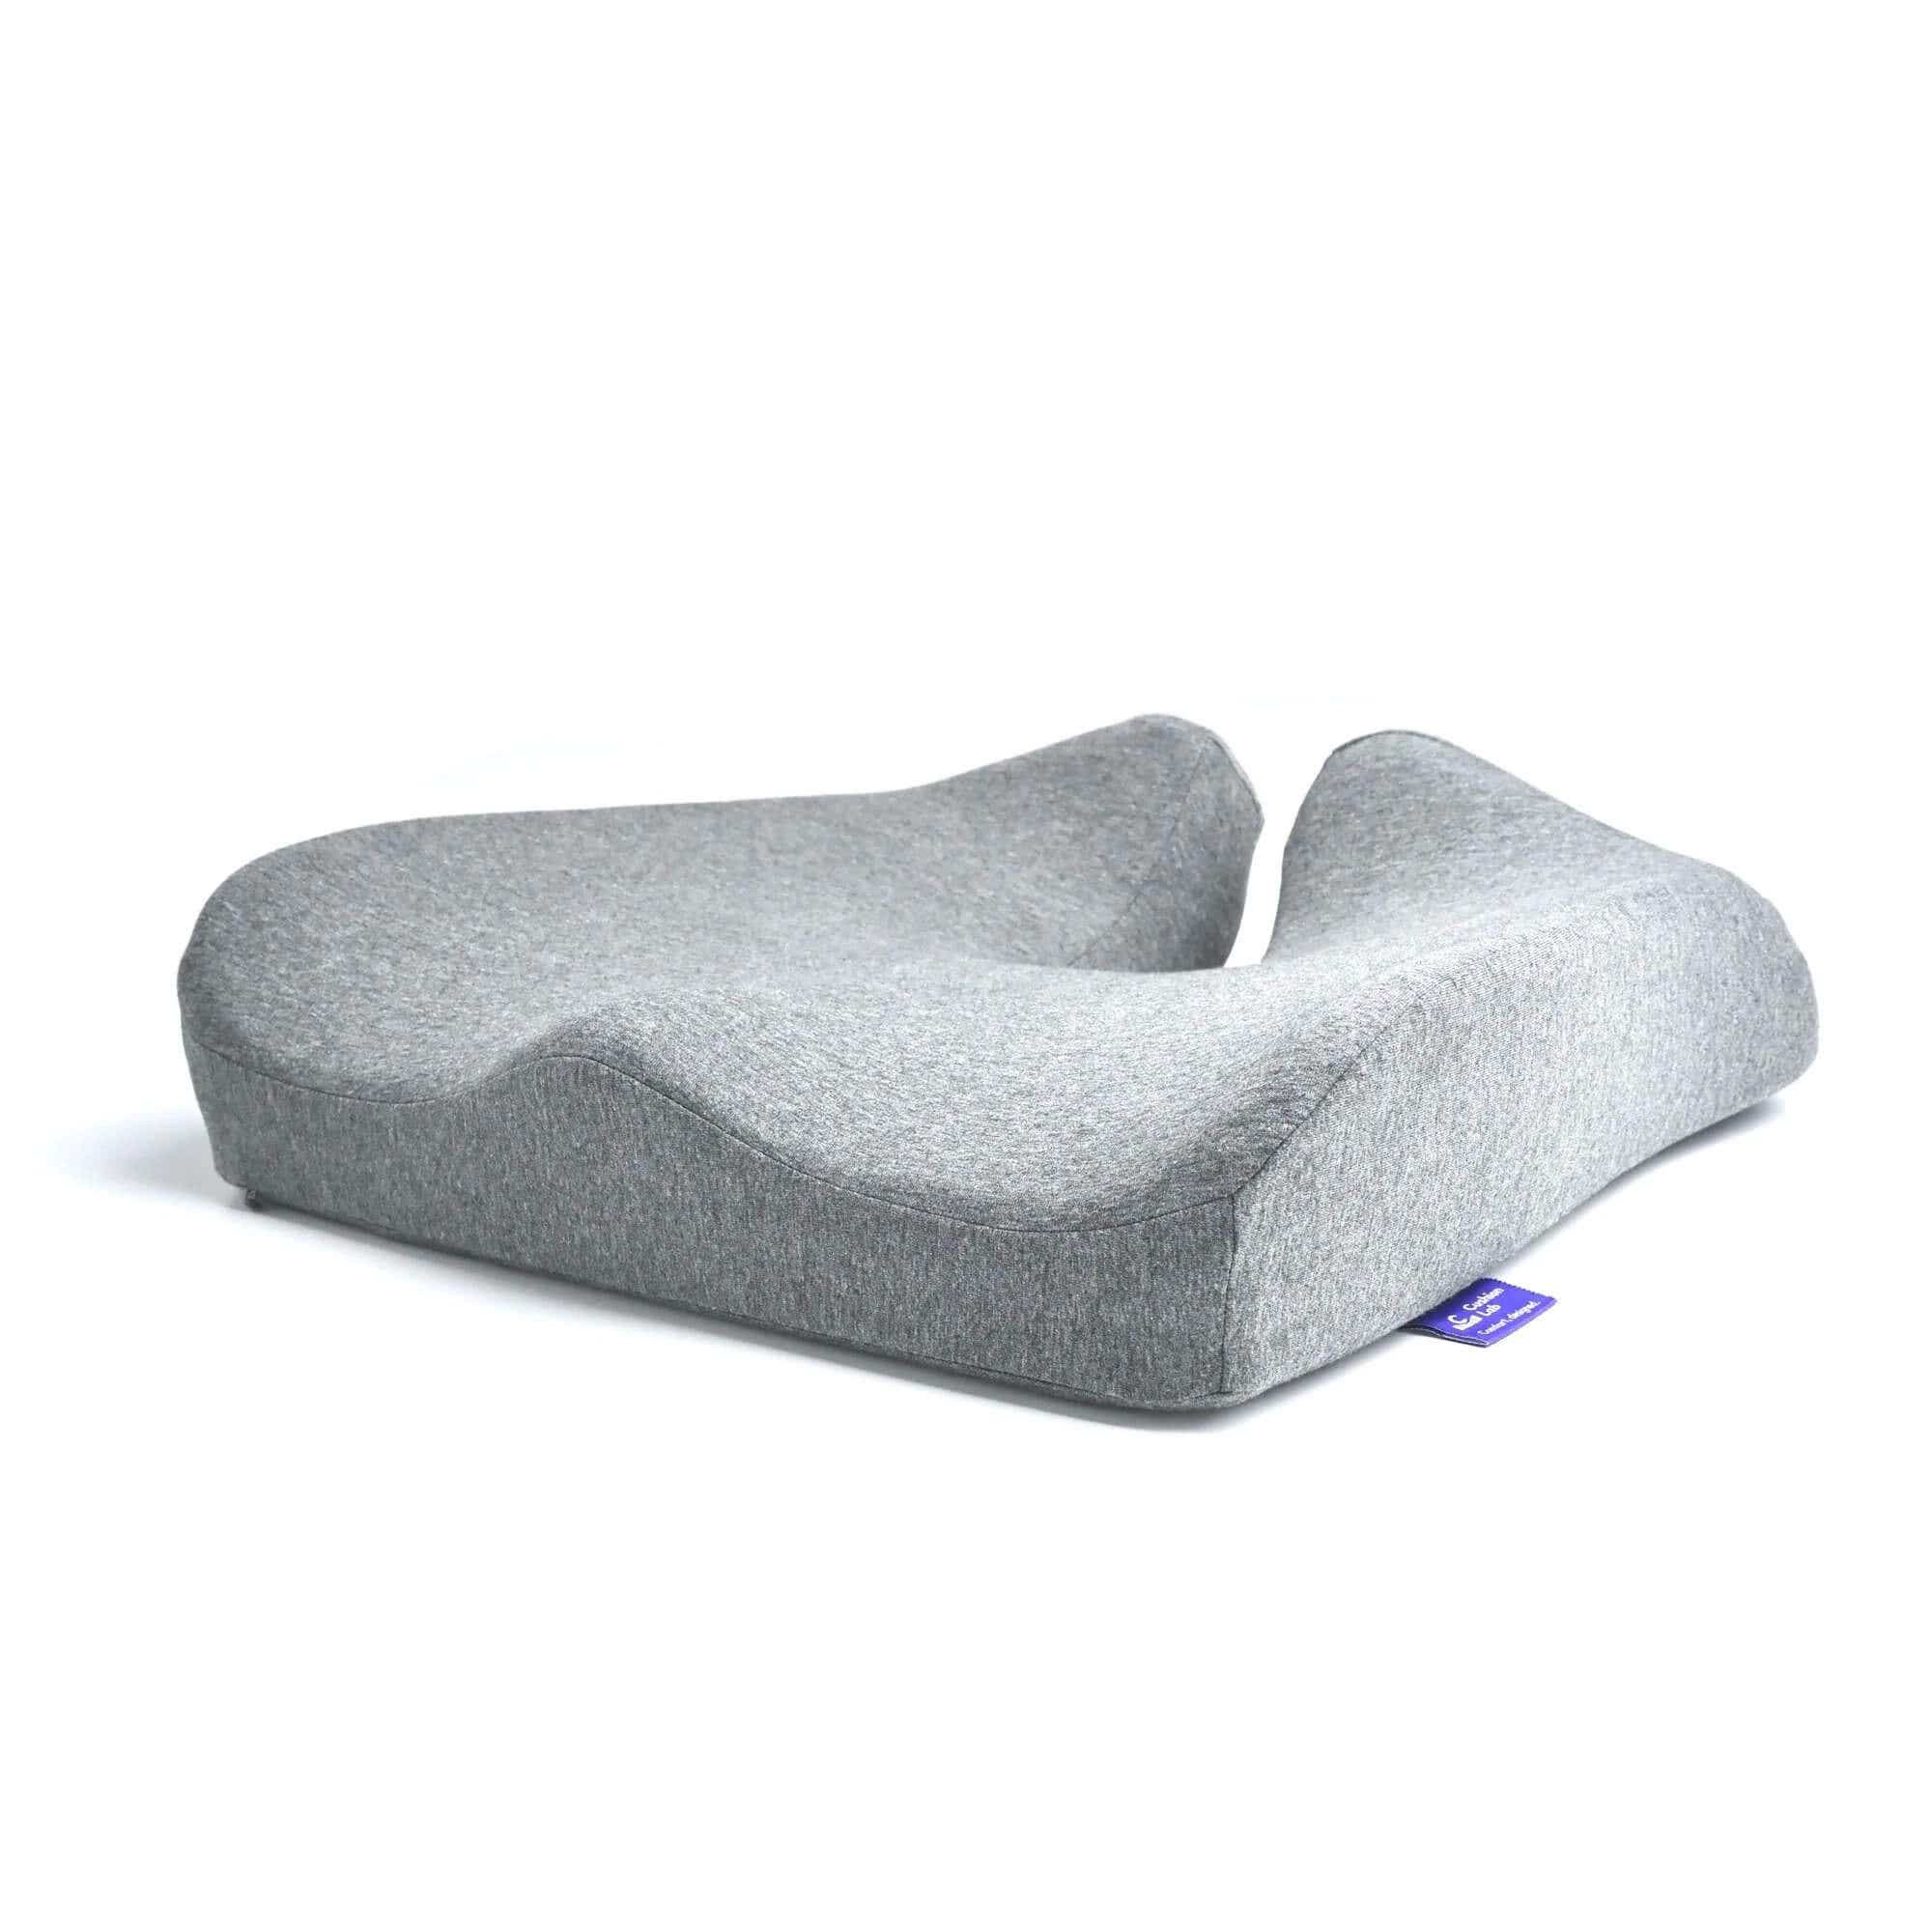 https://katiecouric.com/wp-content/uploads/2022/12/pressure-relief-seat-cushion-782-1.jpg